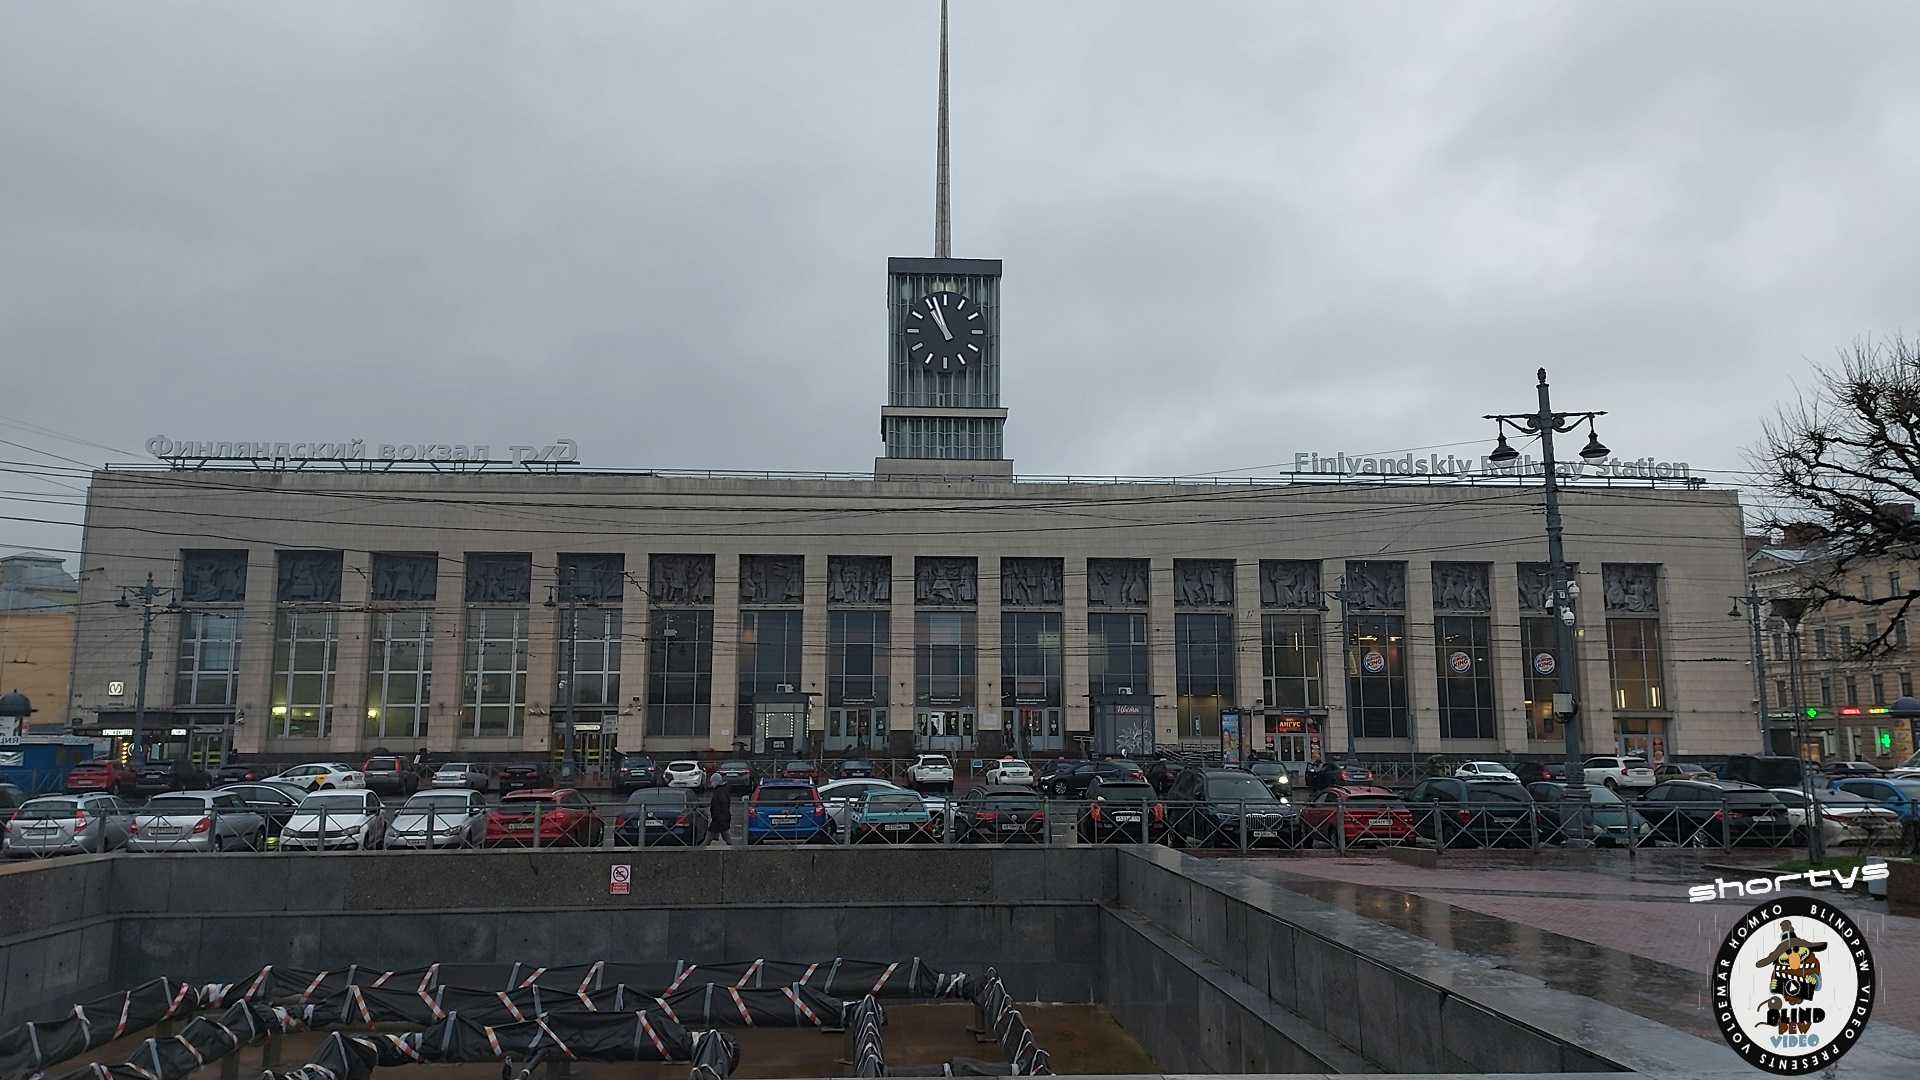 финский вокзал питер